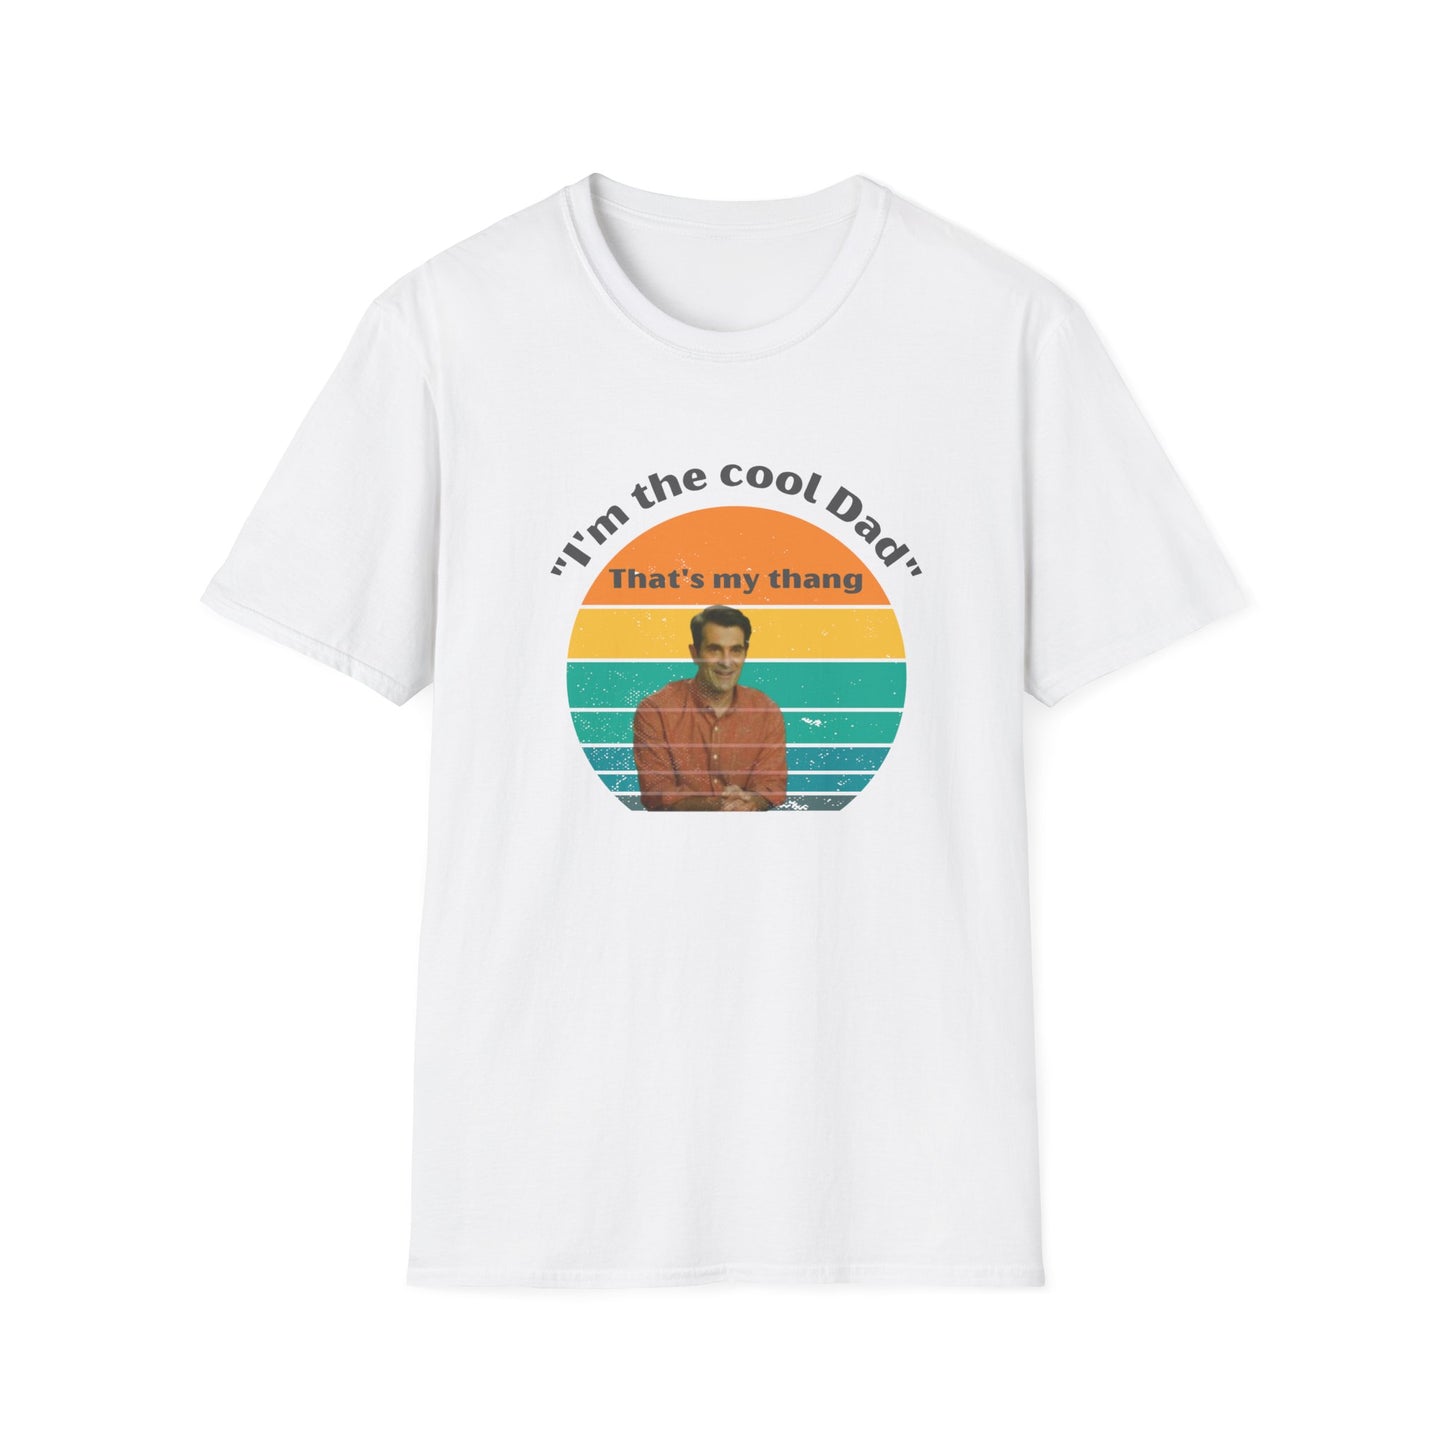 Modern Family t-shirt - "I'm the cool Dad" Phil Dunphy fan t-shirt - Modern Family fan gift